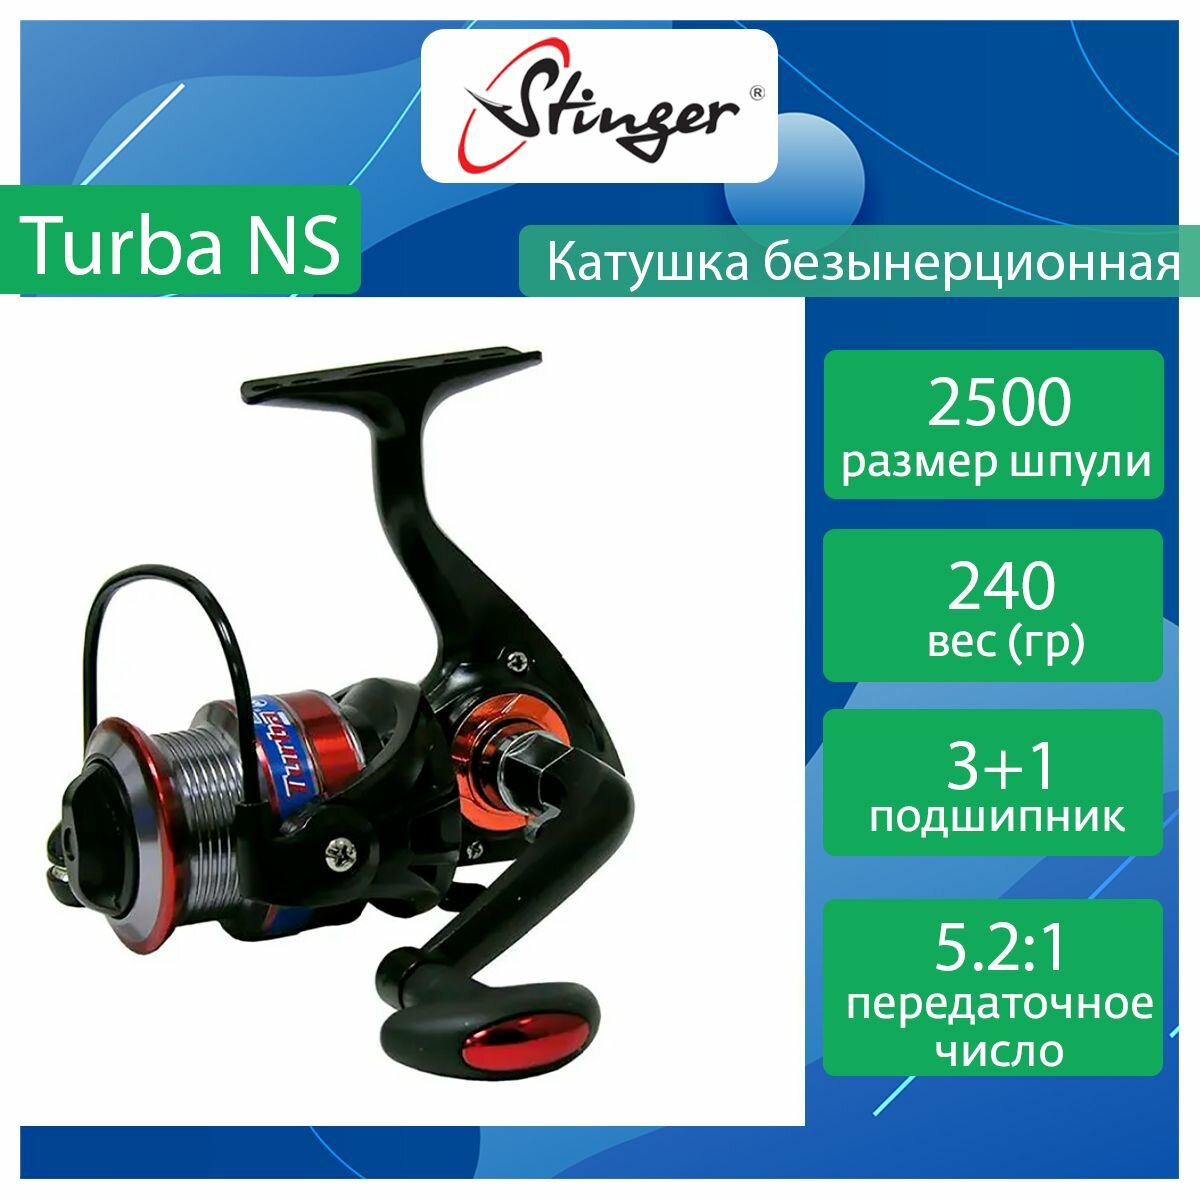 Катушка для рыбалки безынерционная Stinger Turba NS 2500